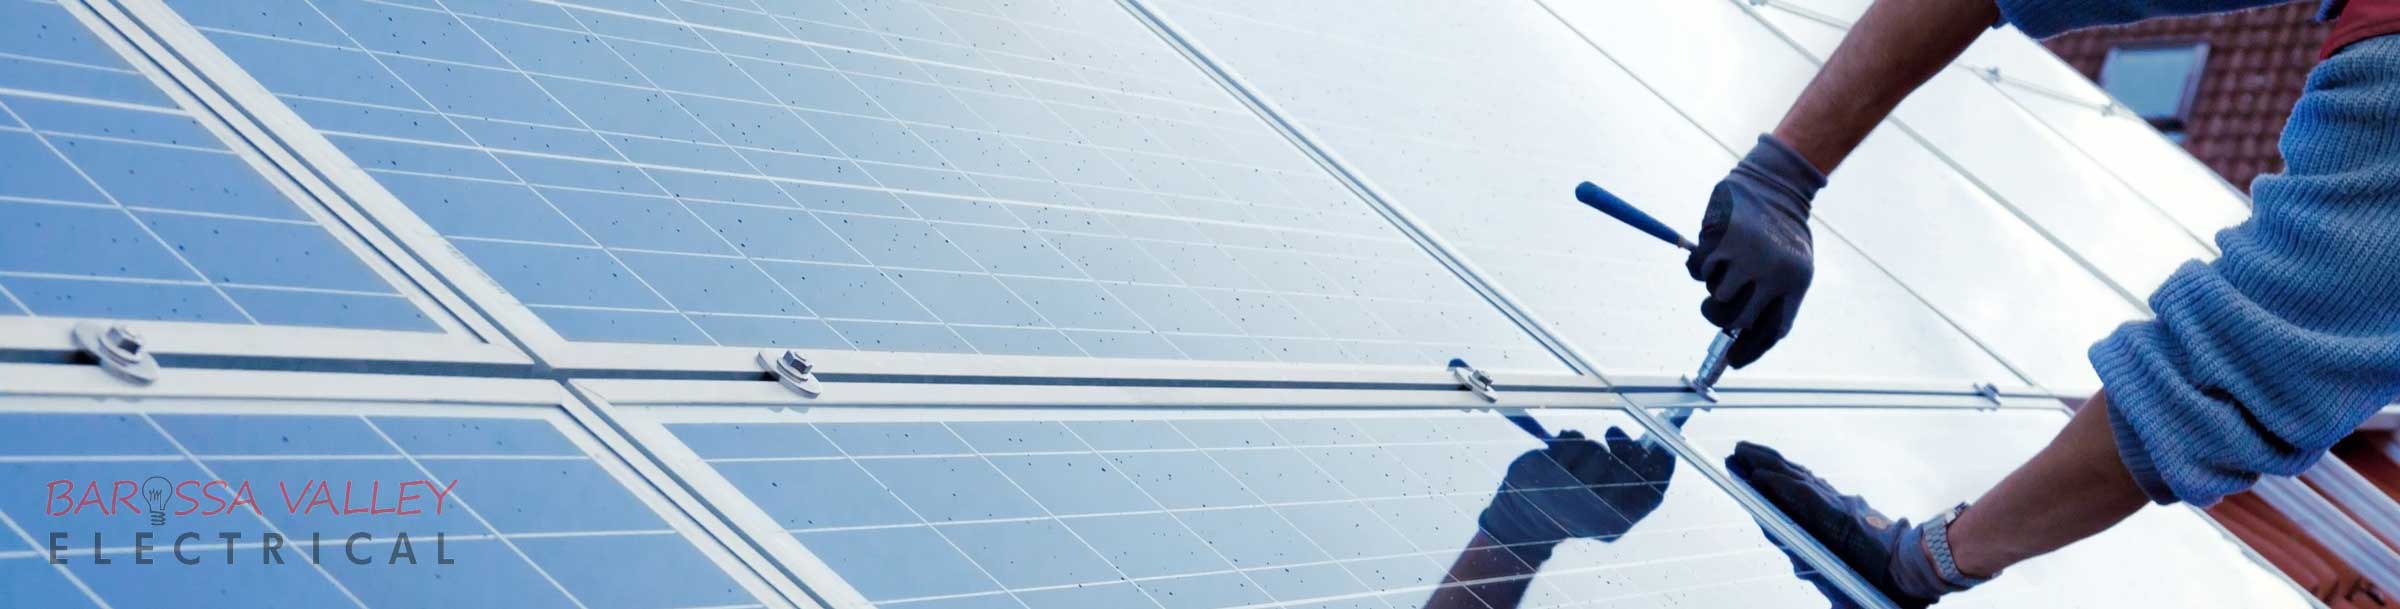 Barossa Valley Electrical - installing solar panels